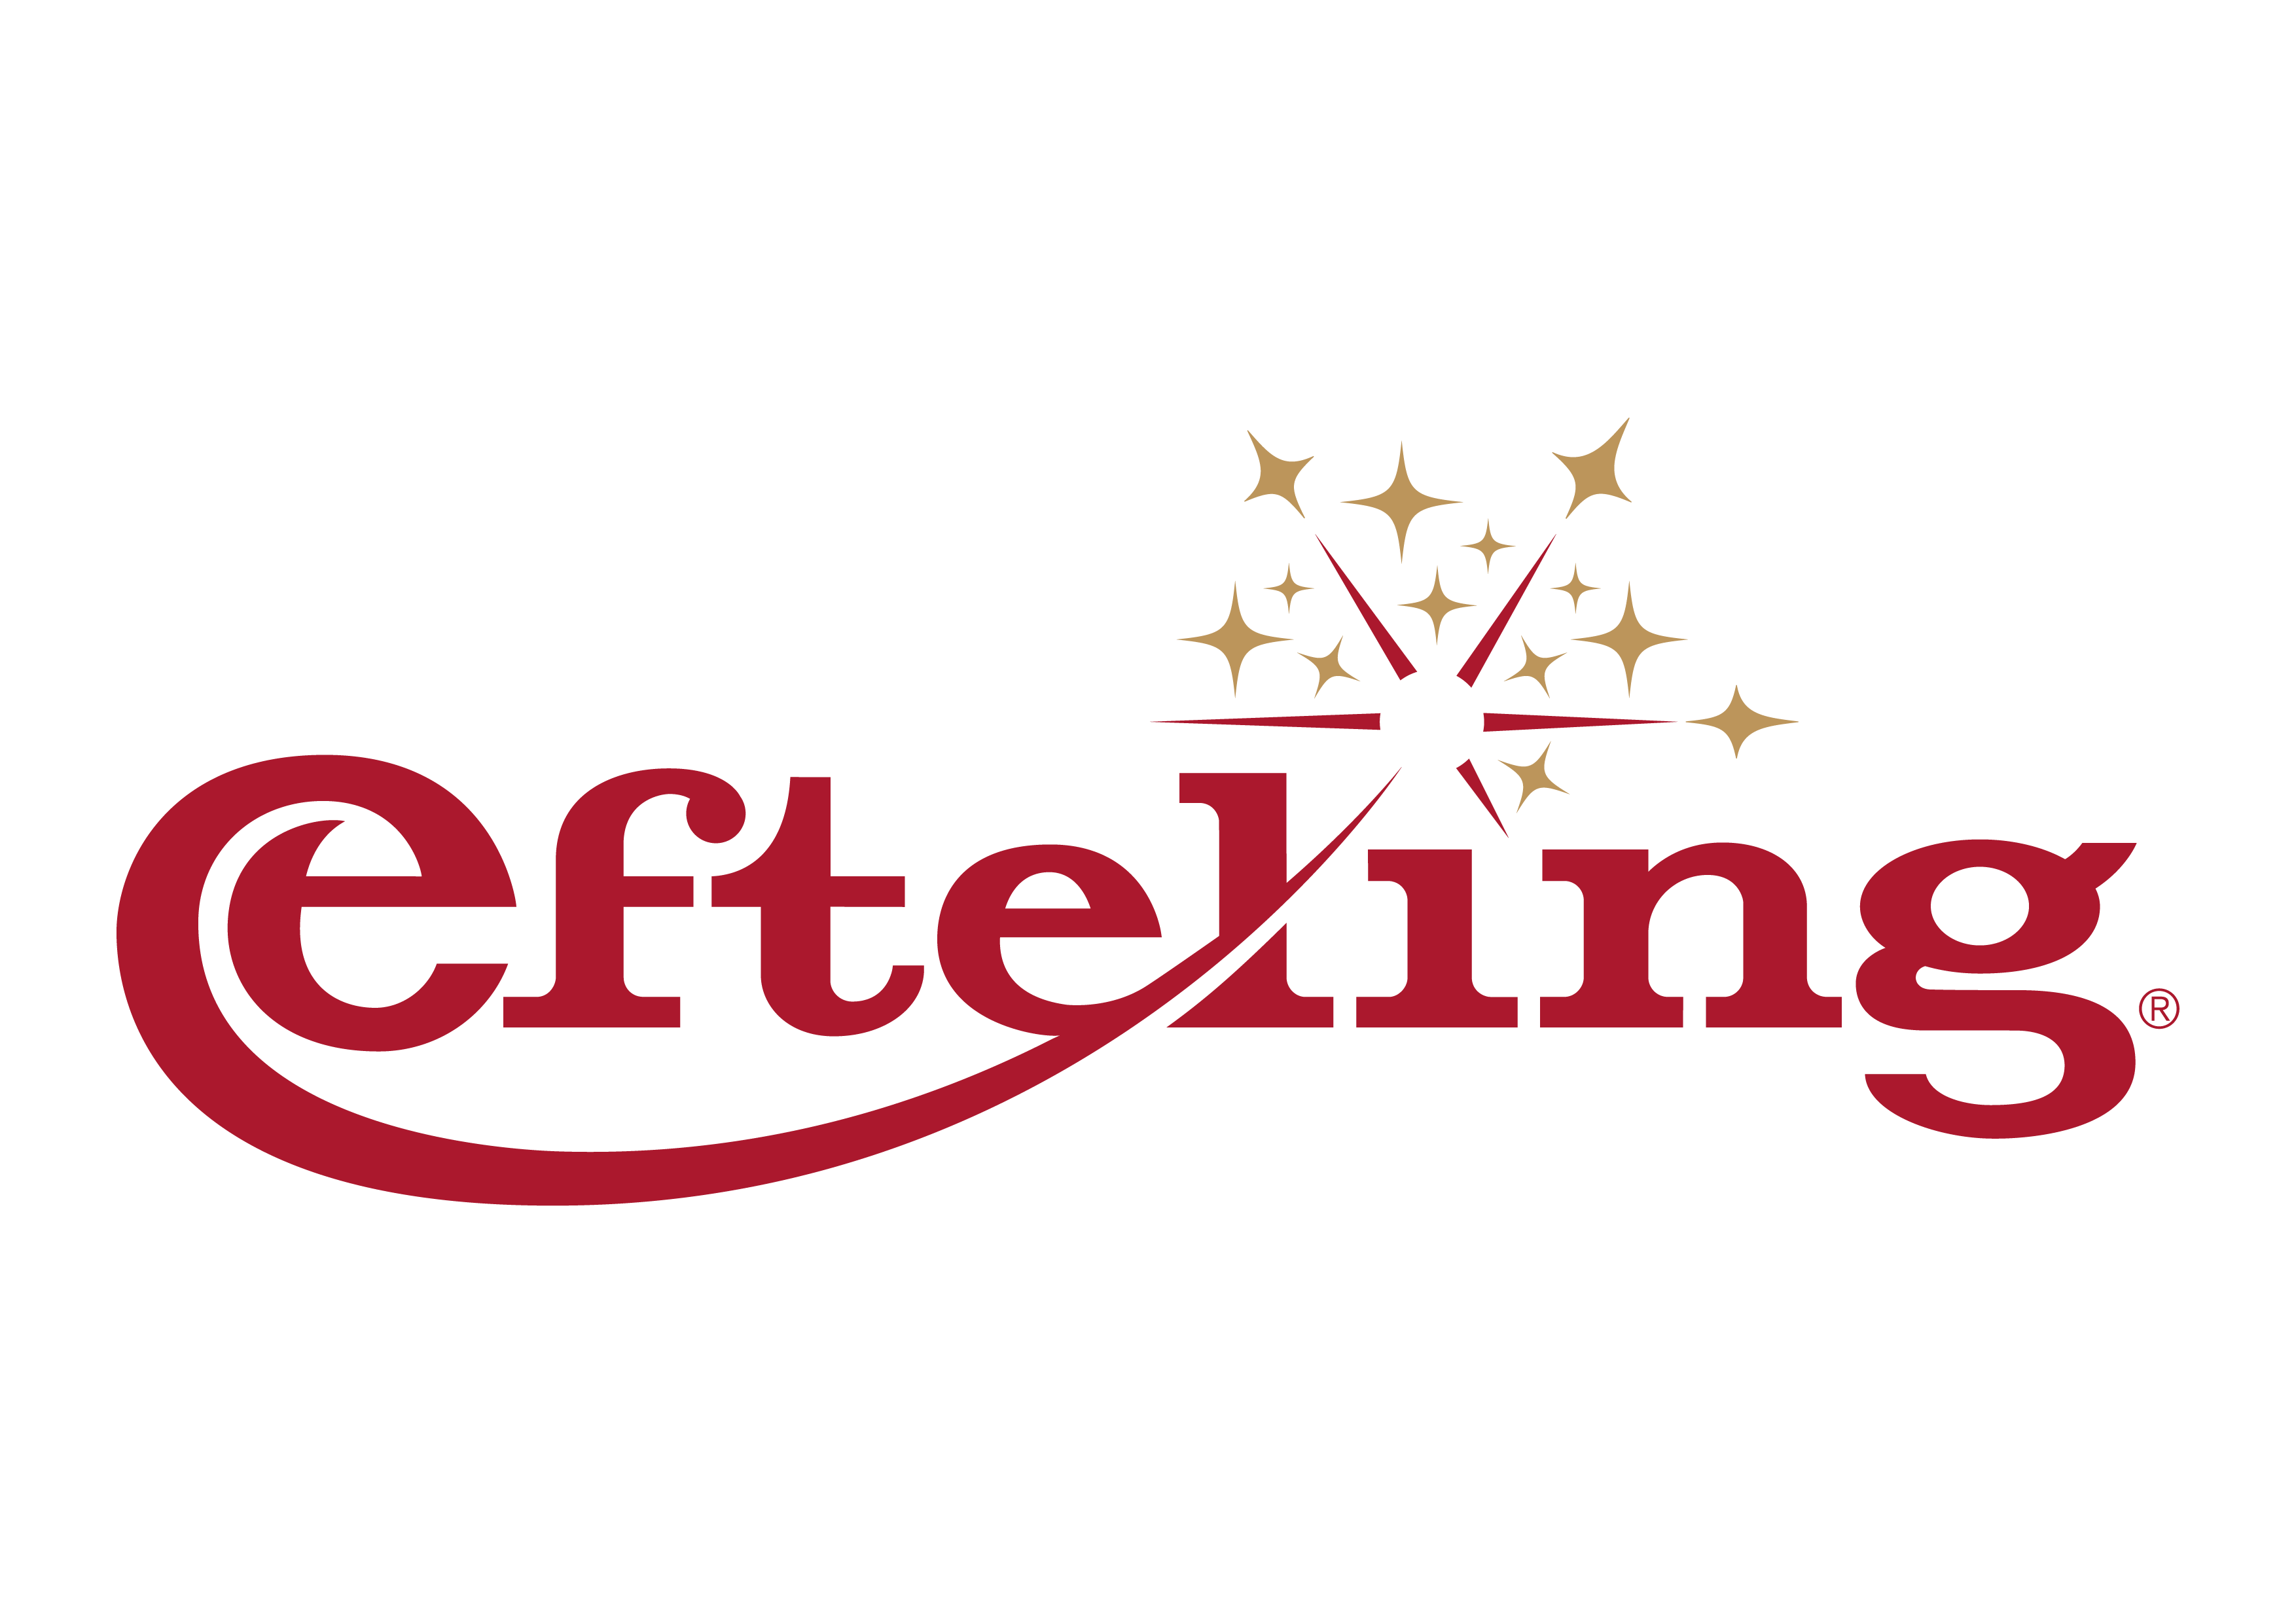 Efteling-logo kleur RGB